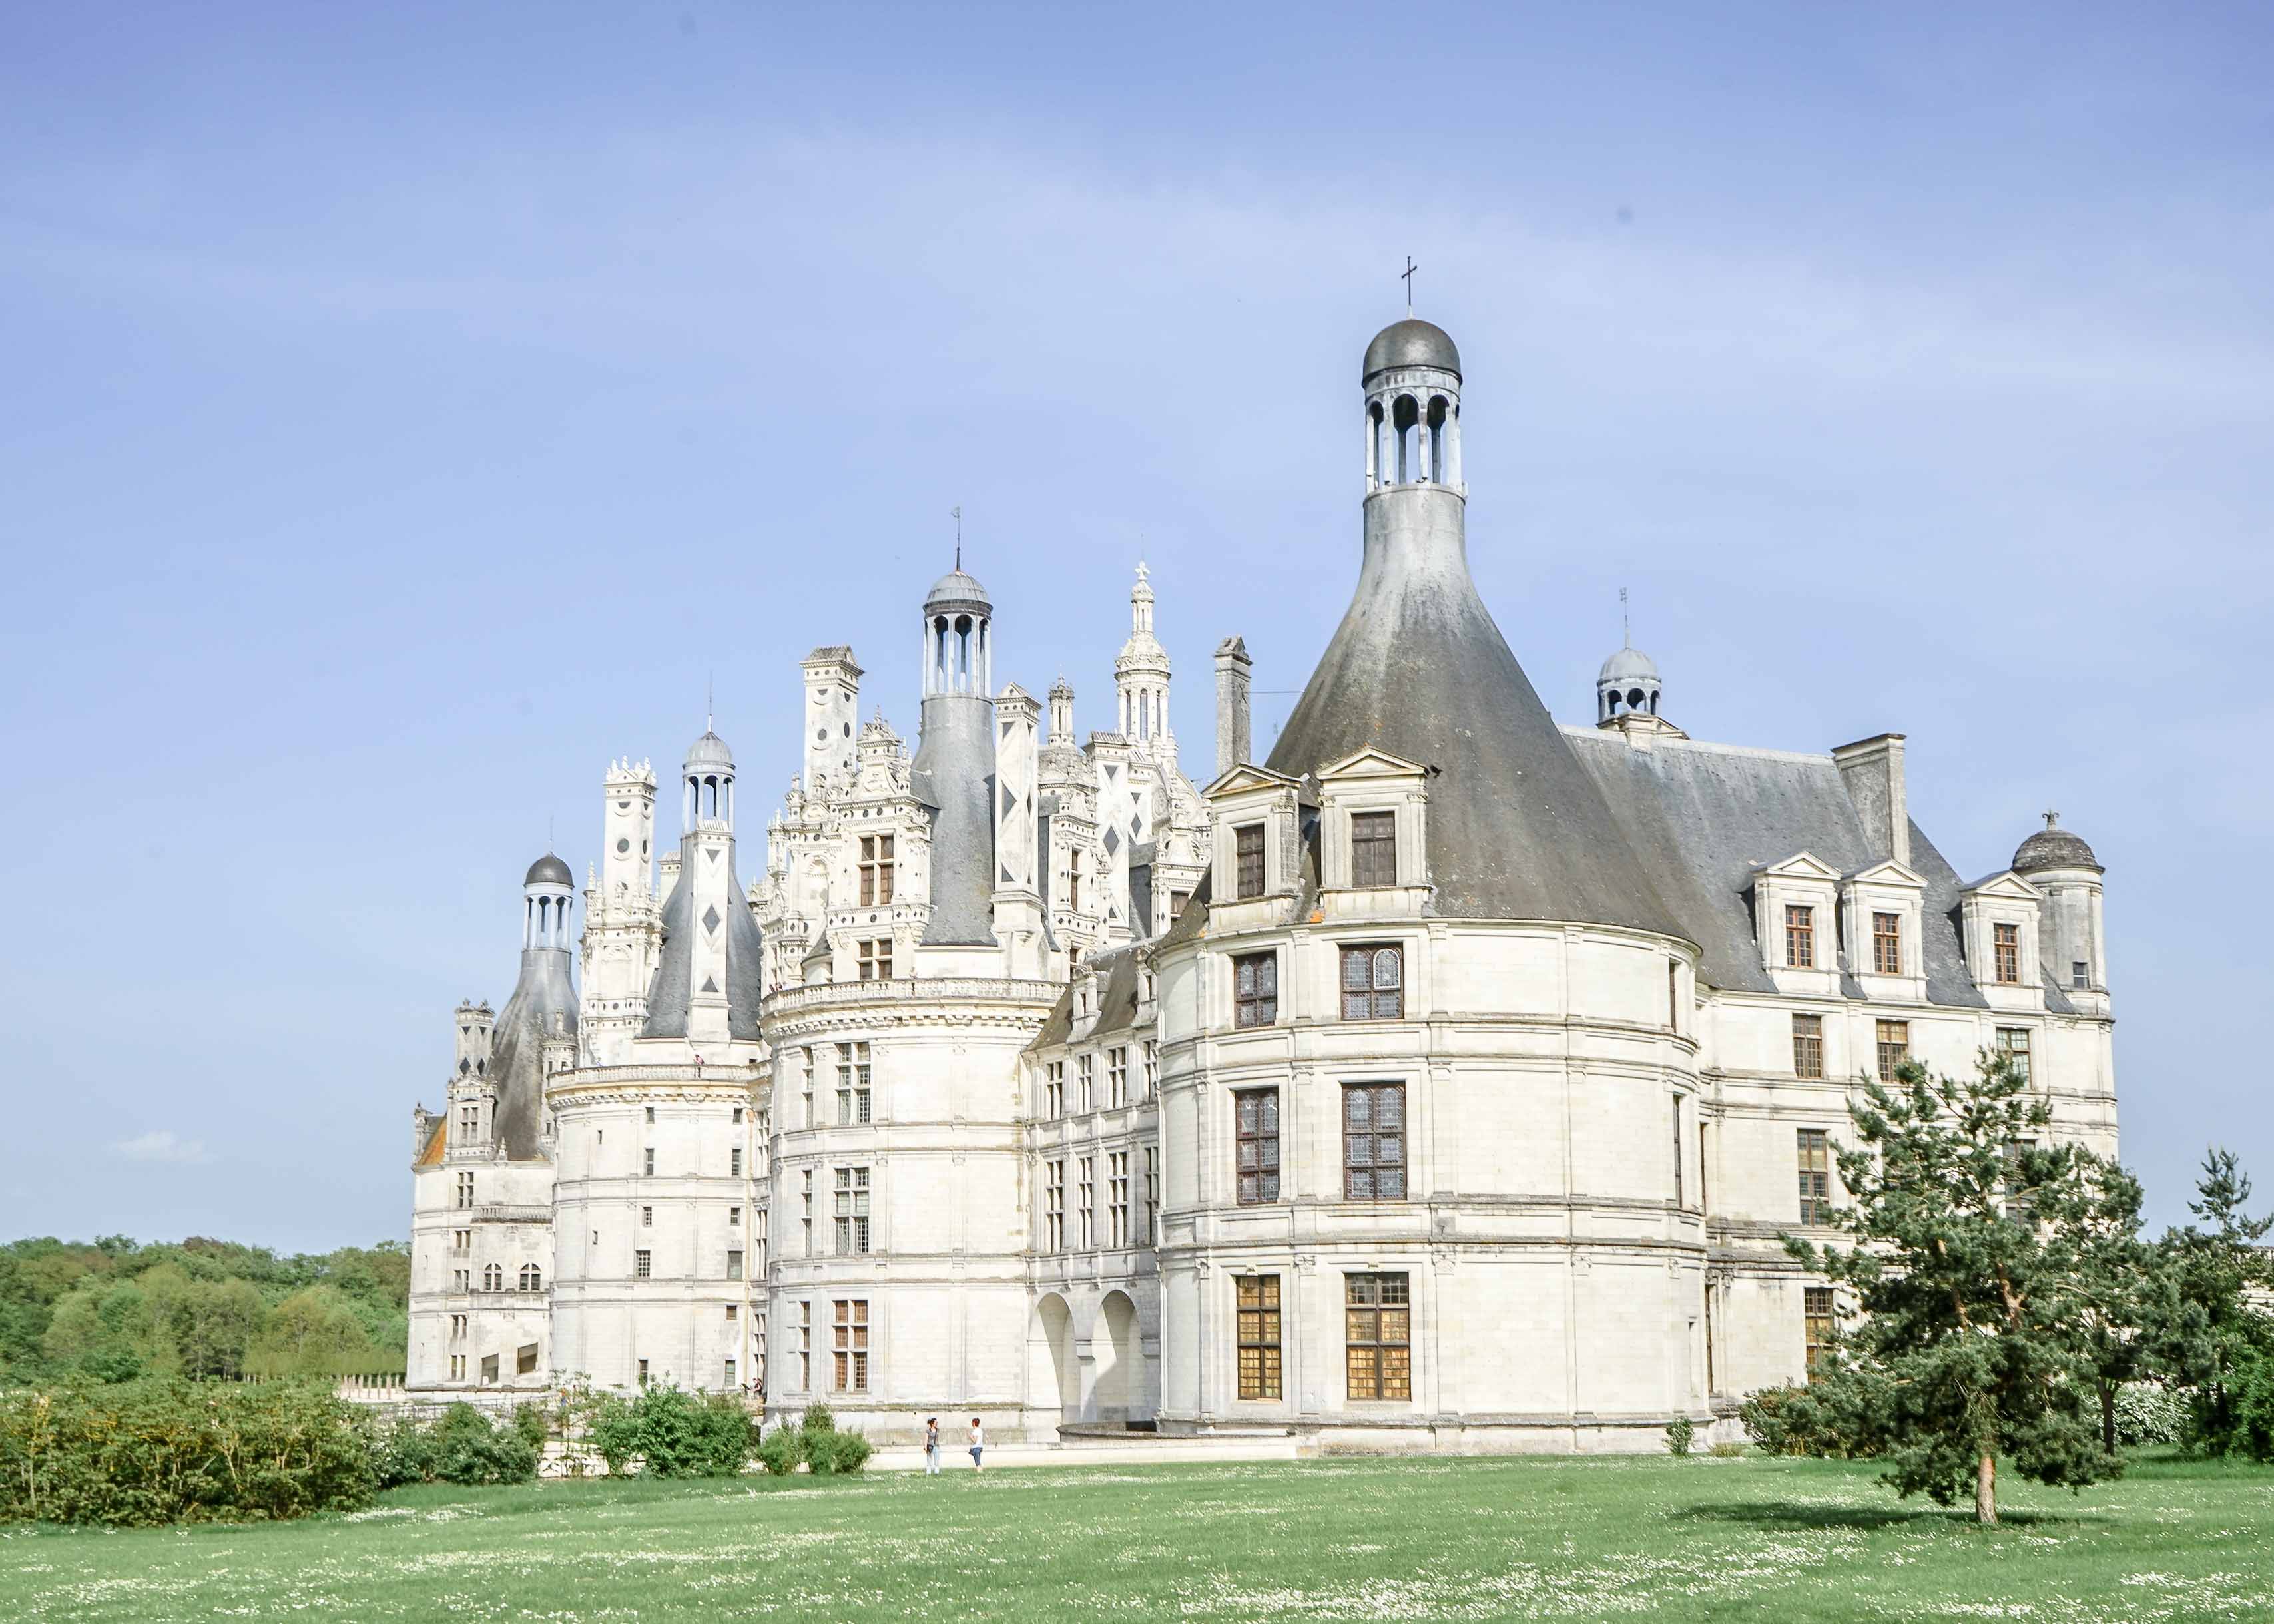 Chateau de Chambord ปราสาทชองบอร์ด